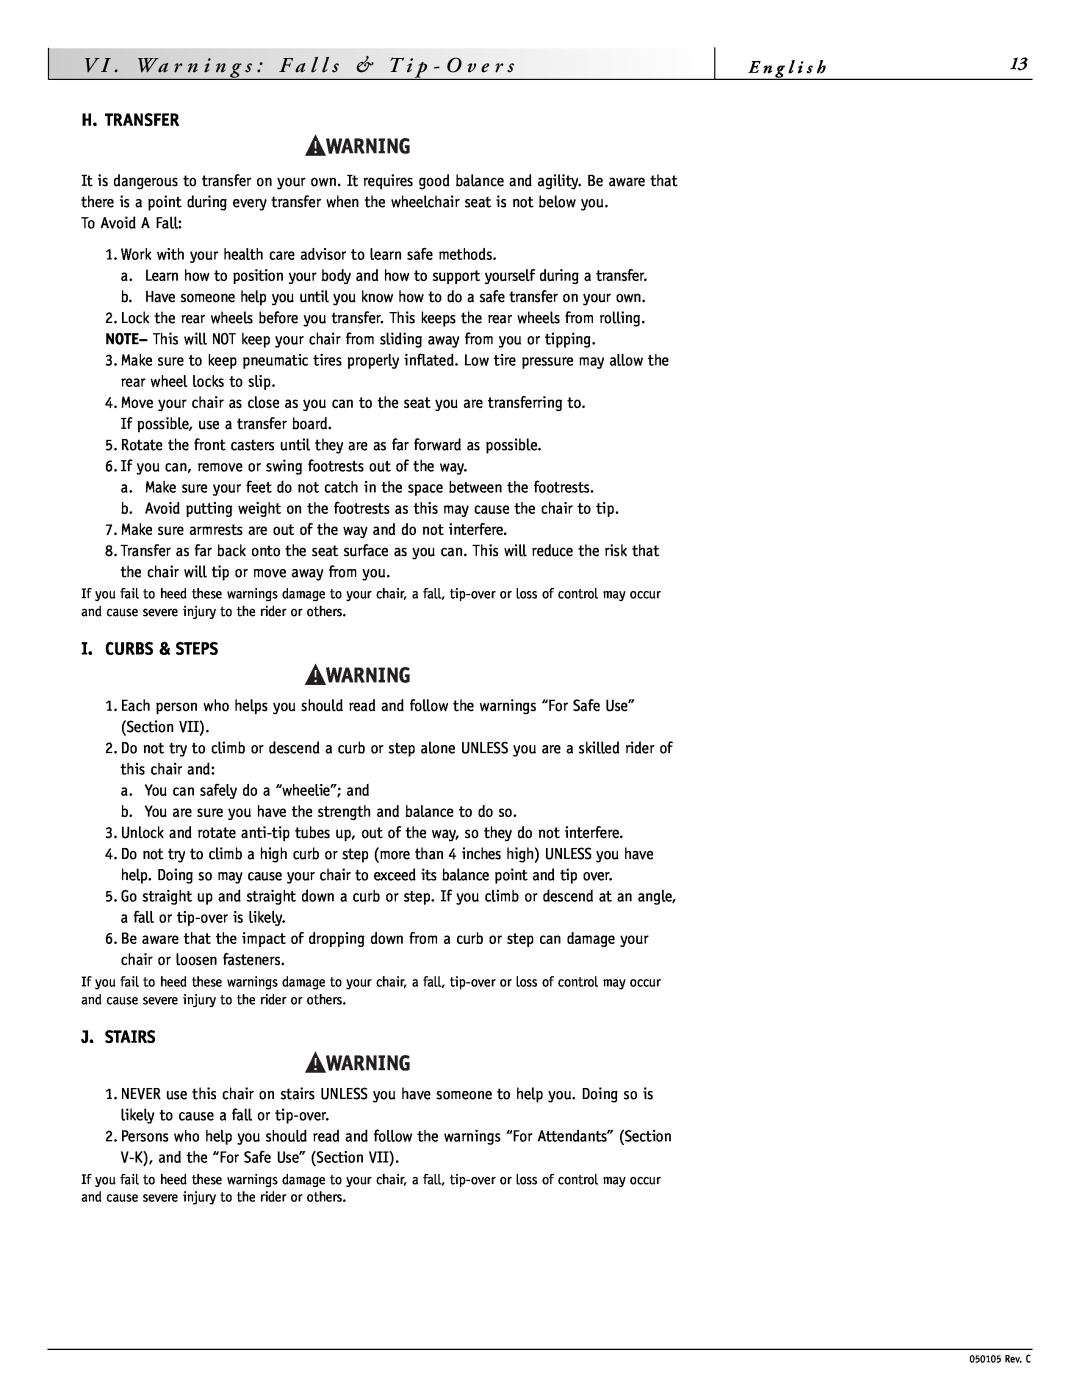 Sunrise Medical GT instruction manual H. Transfer, I. Curbs & Steps, J. Stairs, W a r, v e r s 